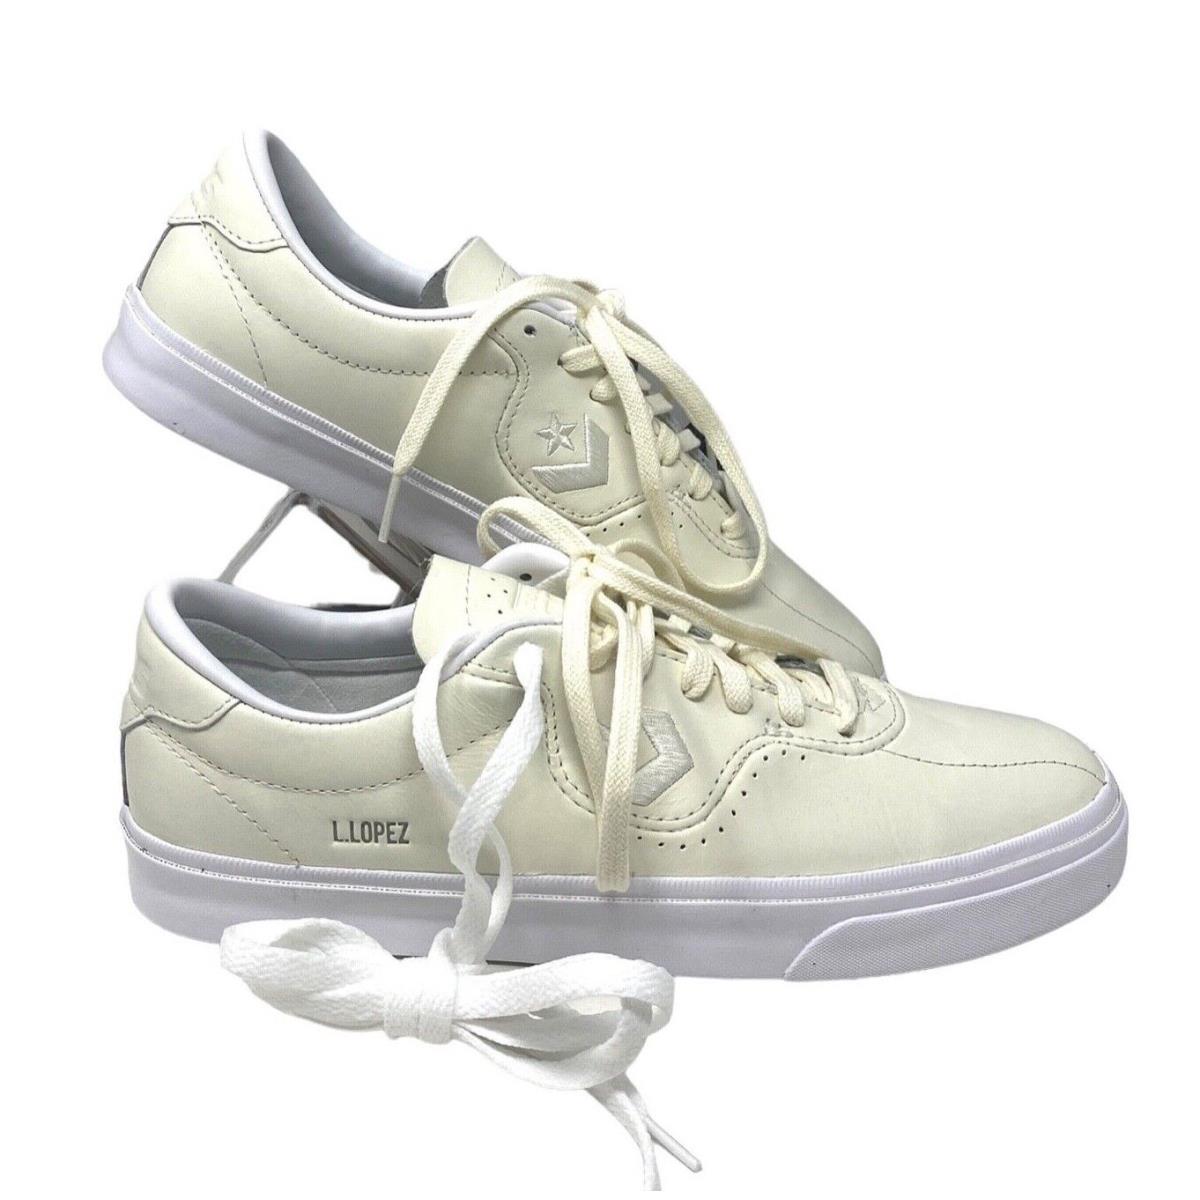 Converse Louie Lopez Pro Low Top White Women Leather Sneakers Shoes Size 170500C